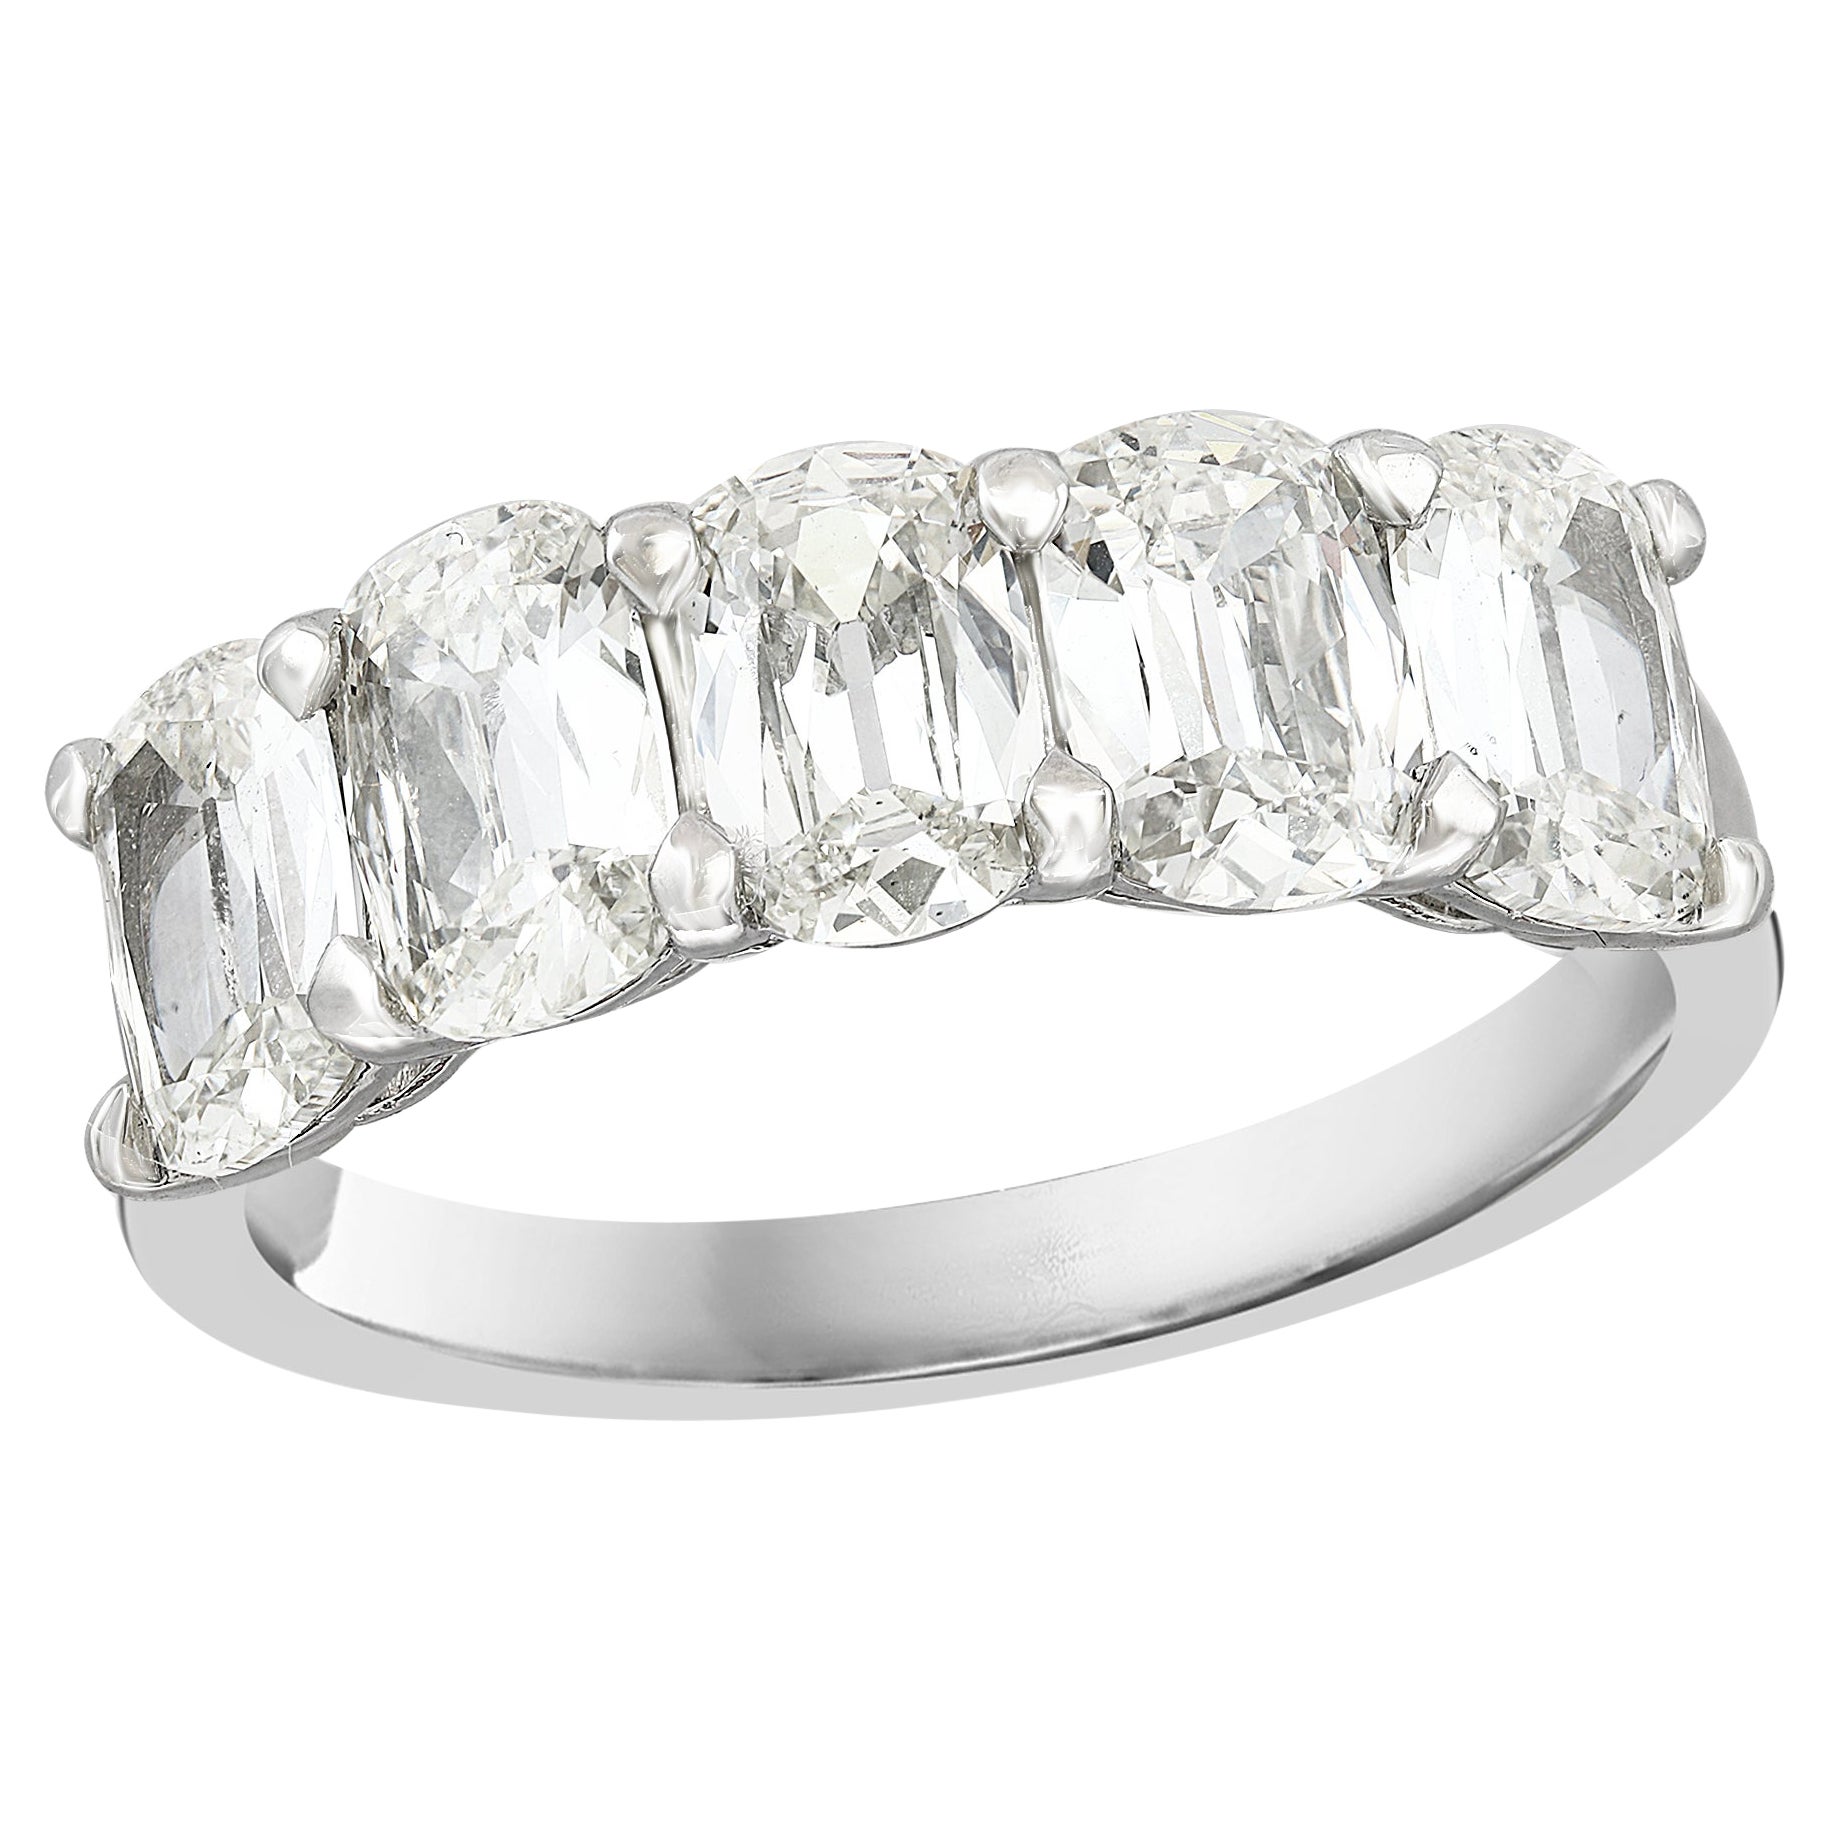 2.63 Carat Cushion Cut 5 Stone Diamond Ring in Platinum For Sale